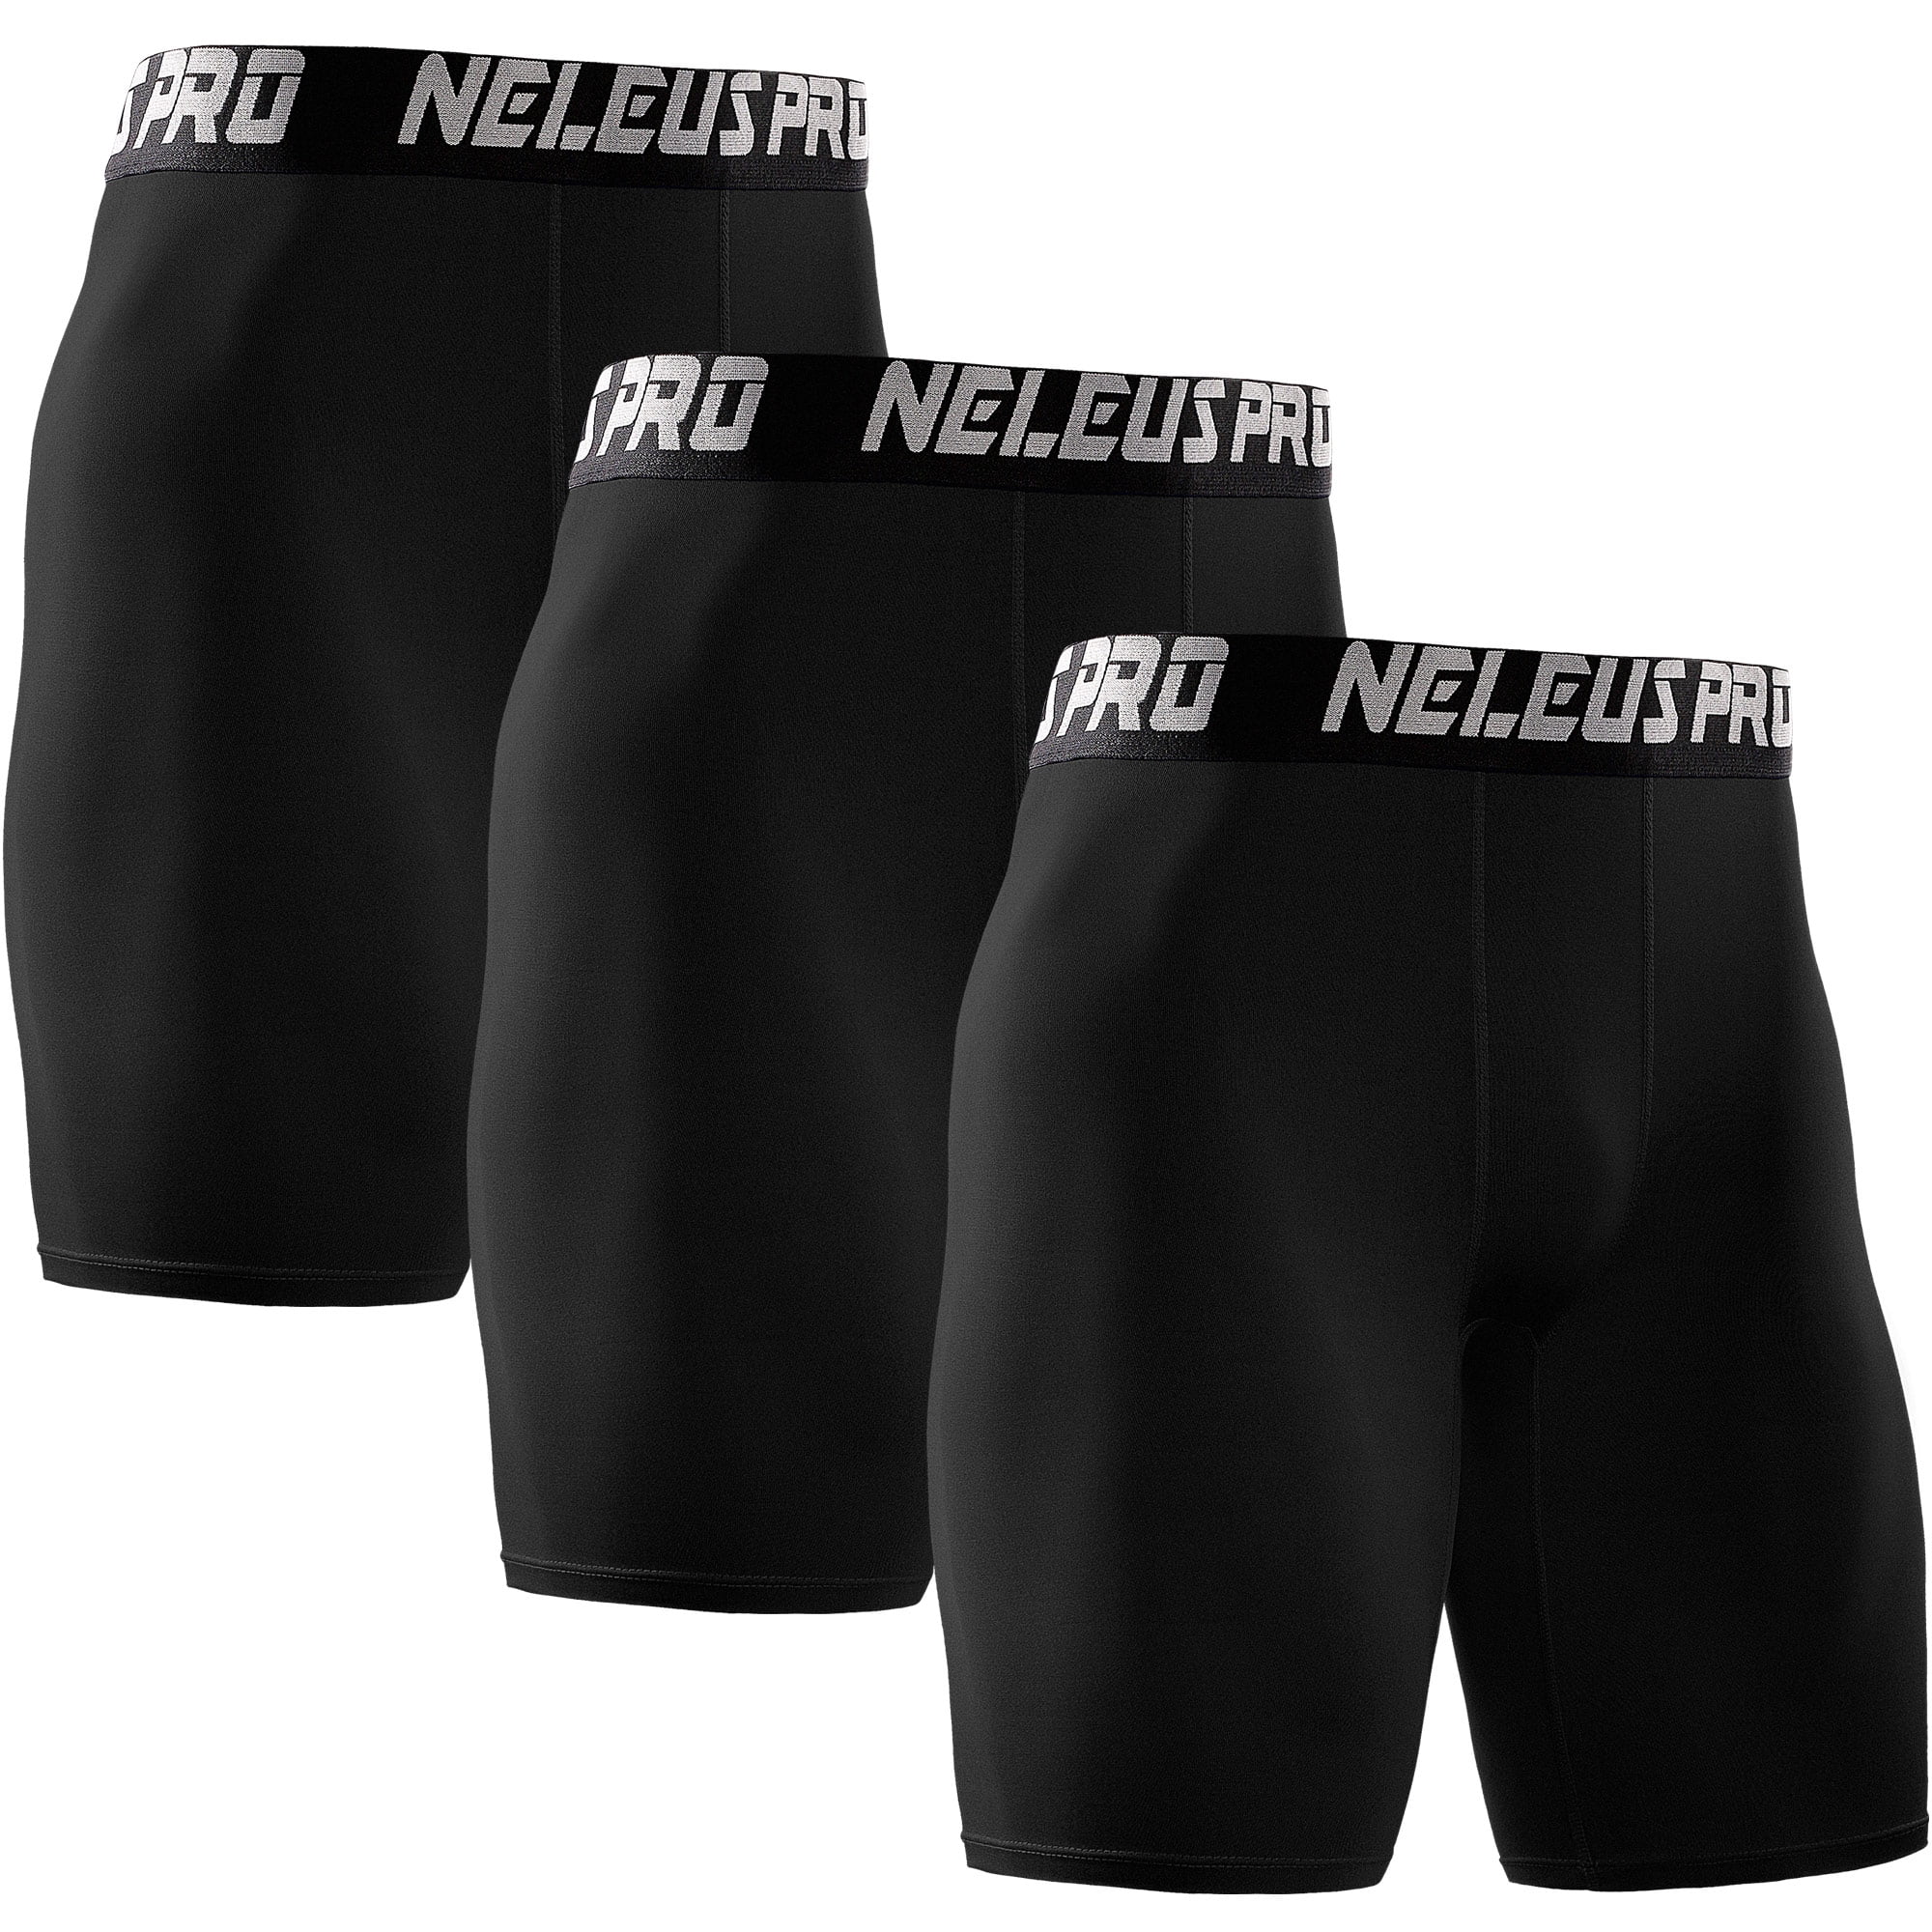 Niksa Performance Compression Shorts 3 pack